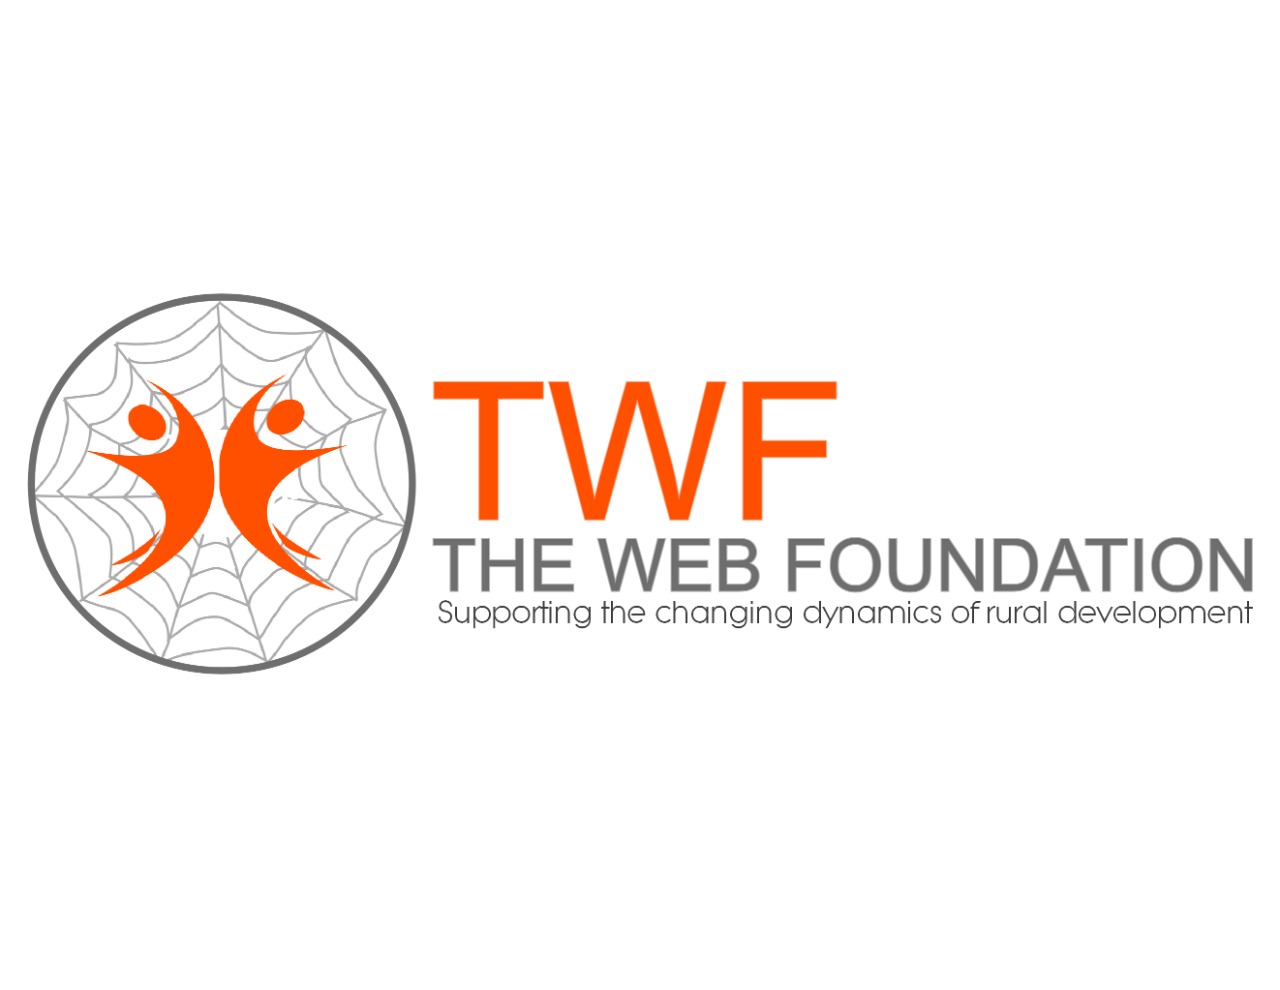 The Web Foundation